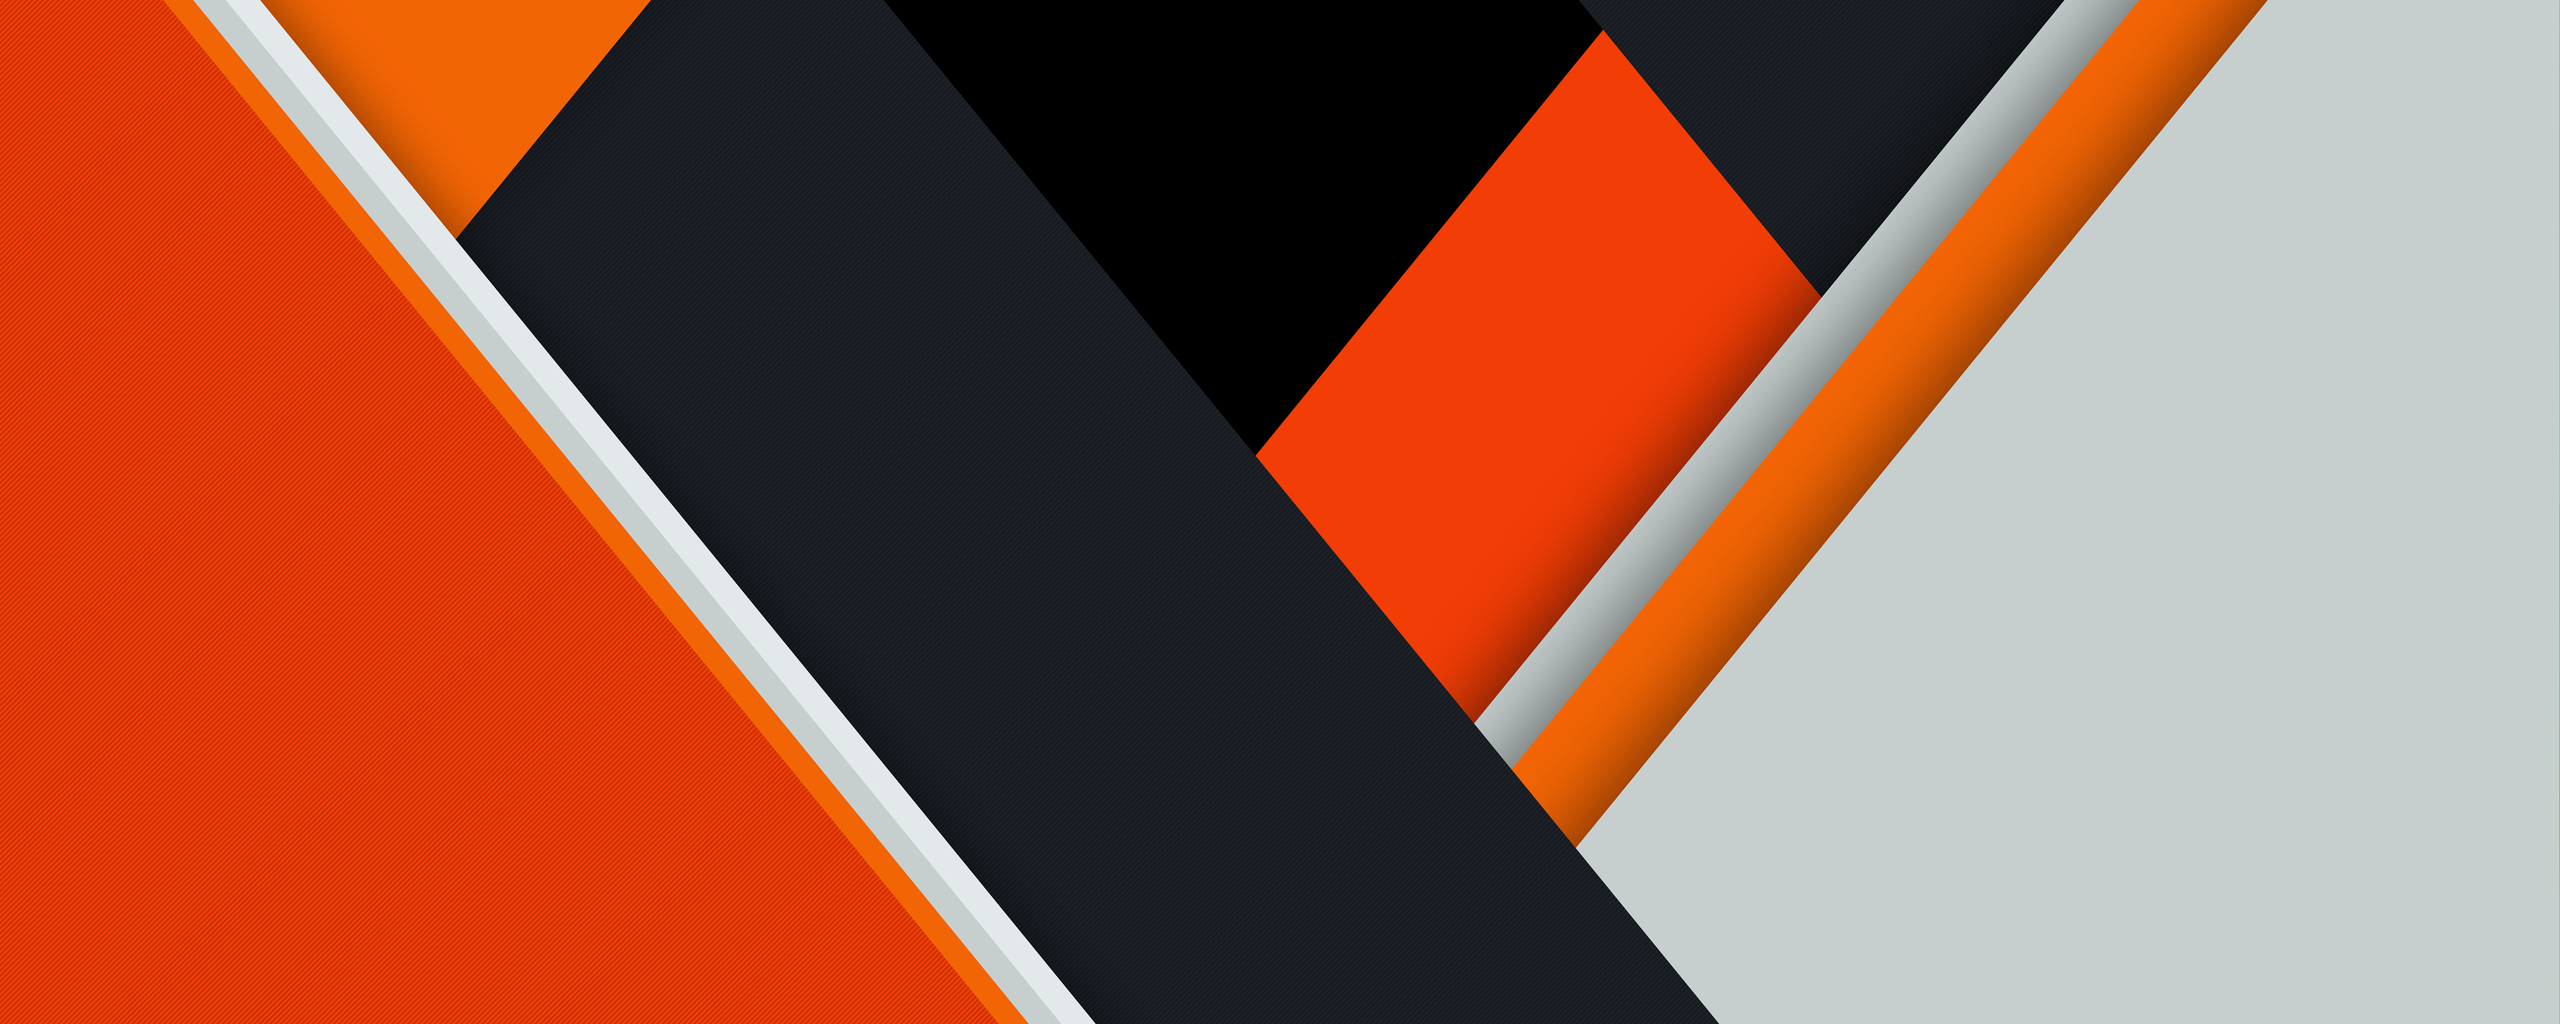 orange-black-material-design-8k-62.jpg